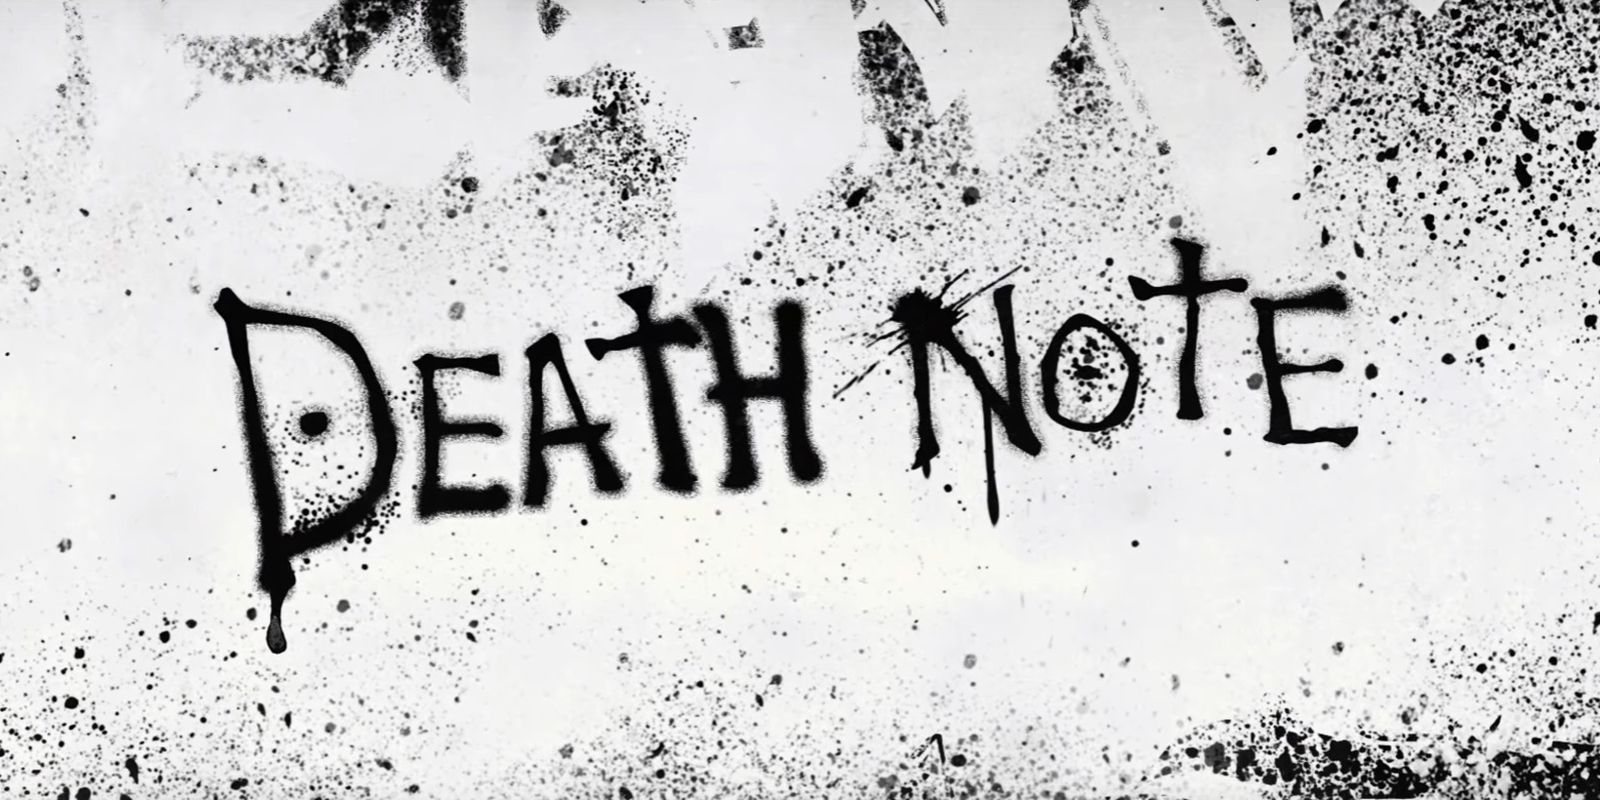 black death note logo monochrome | konachan.net - Konachan.com Anime  Wallpapers